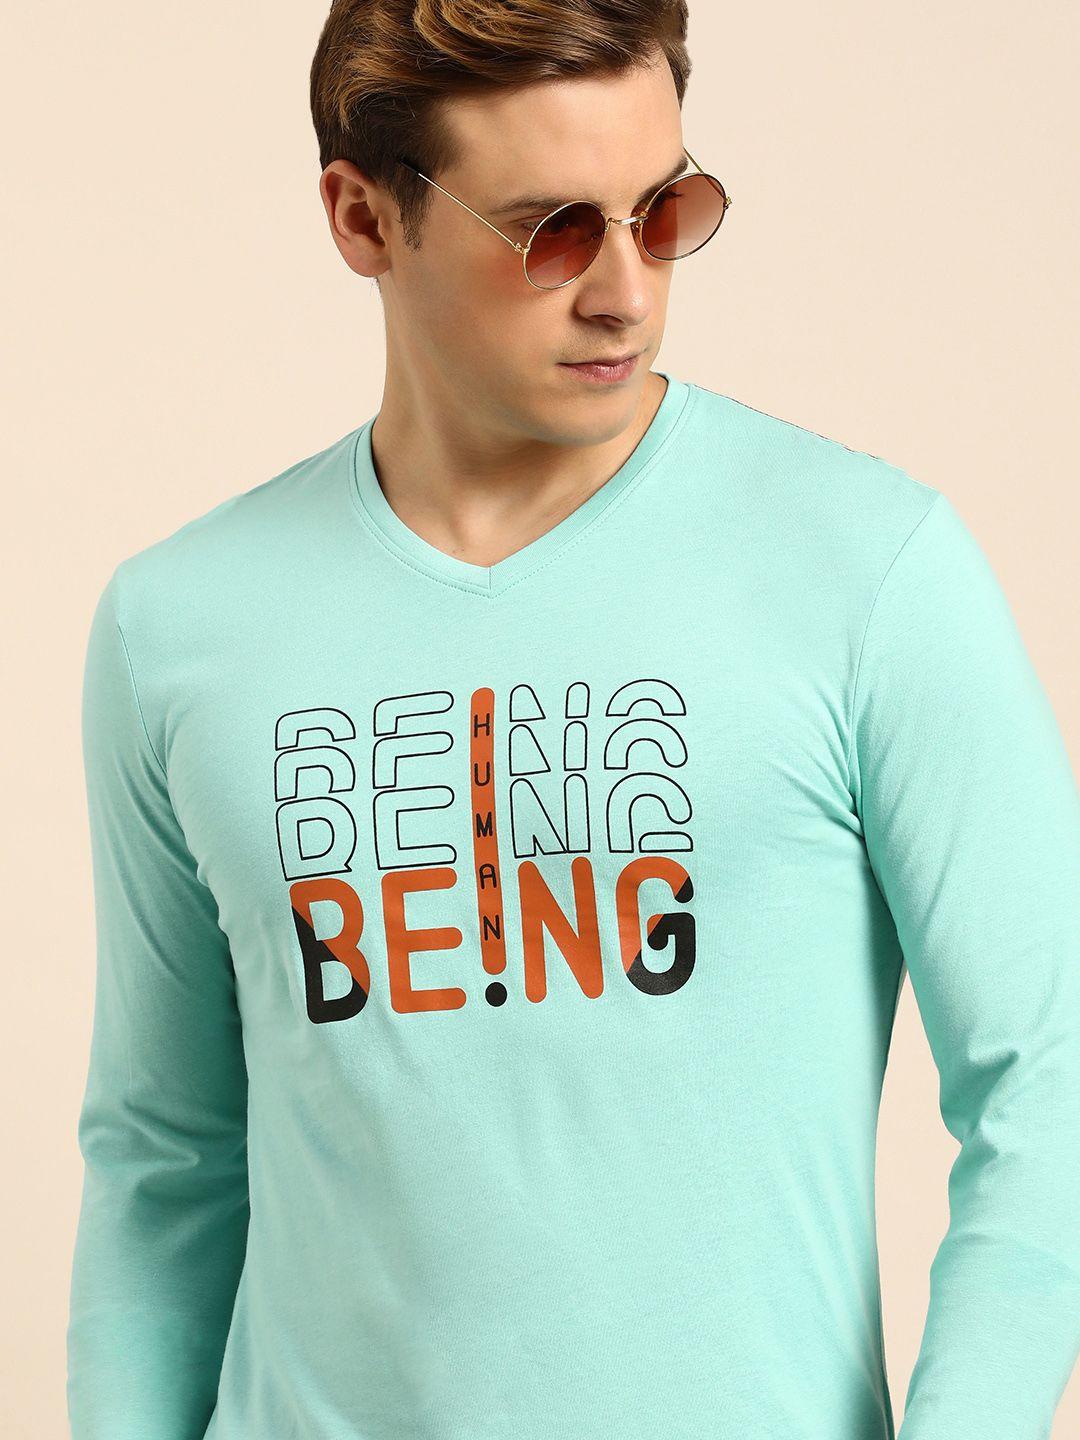 being human brand logo printed pure cotton t-shirt